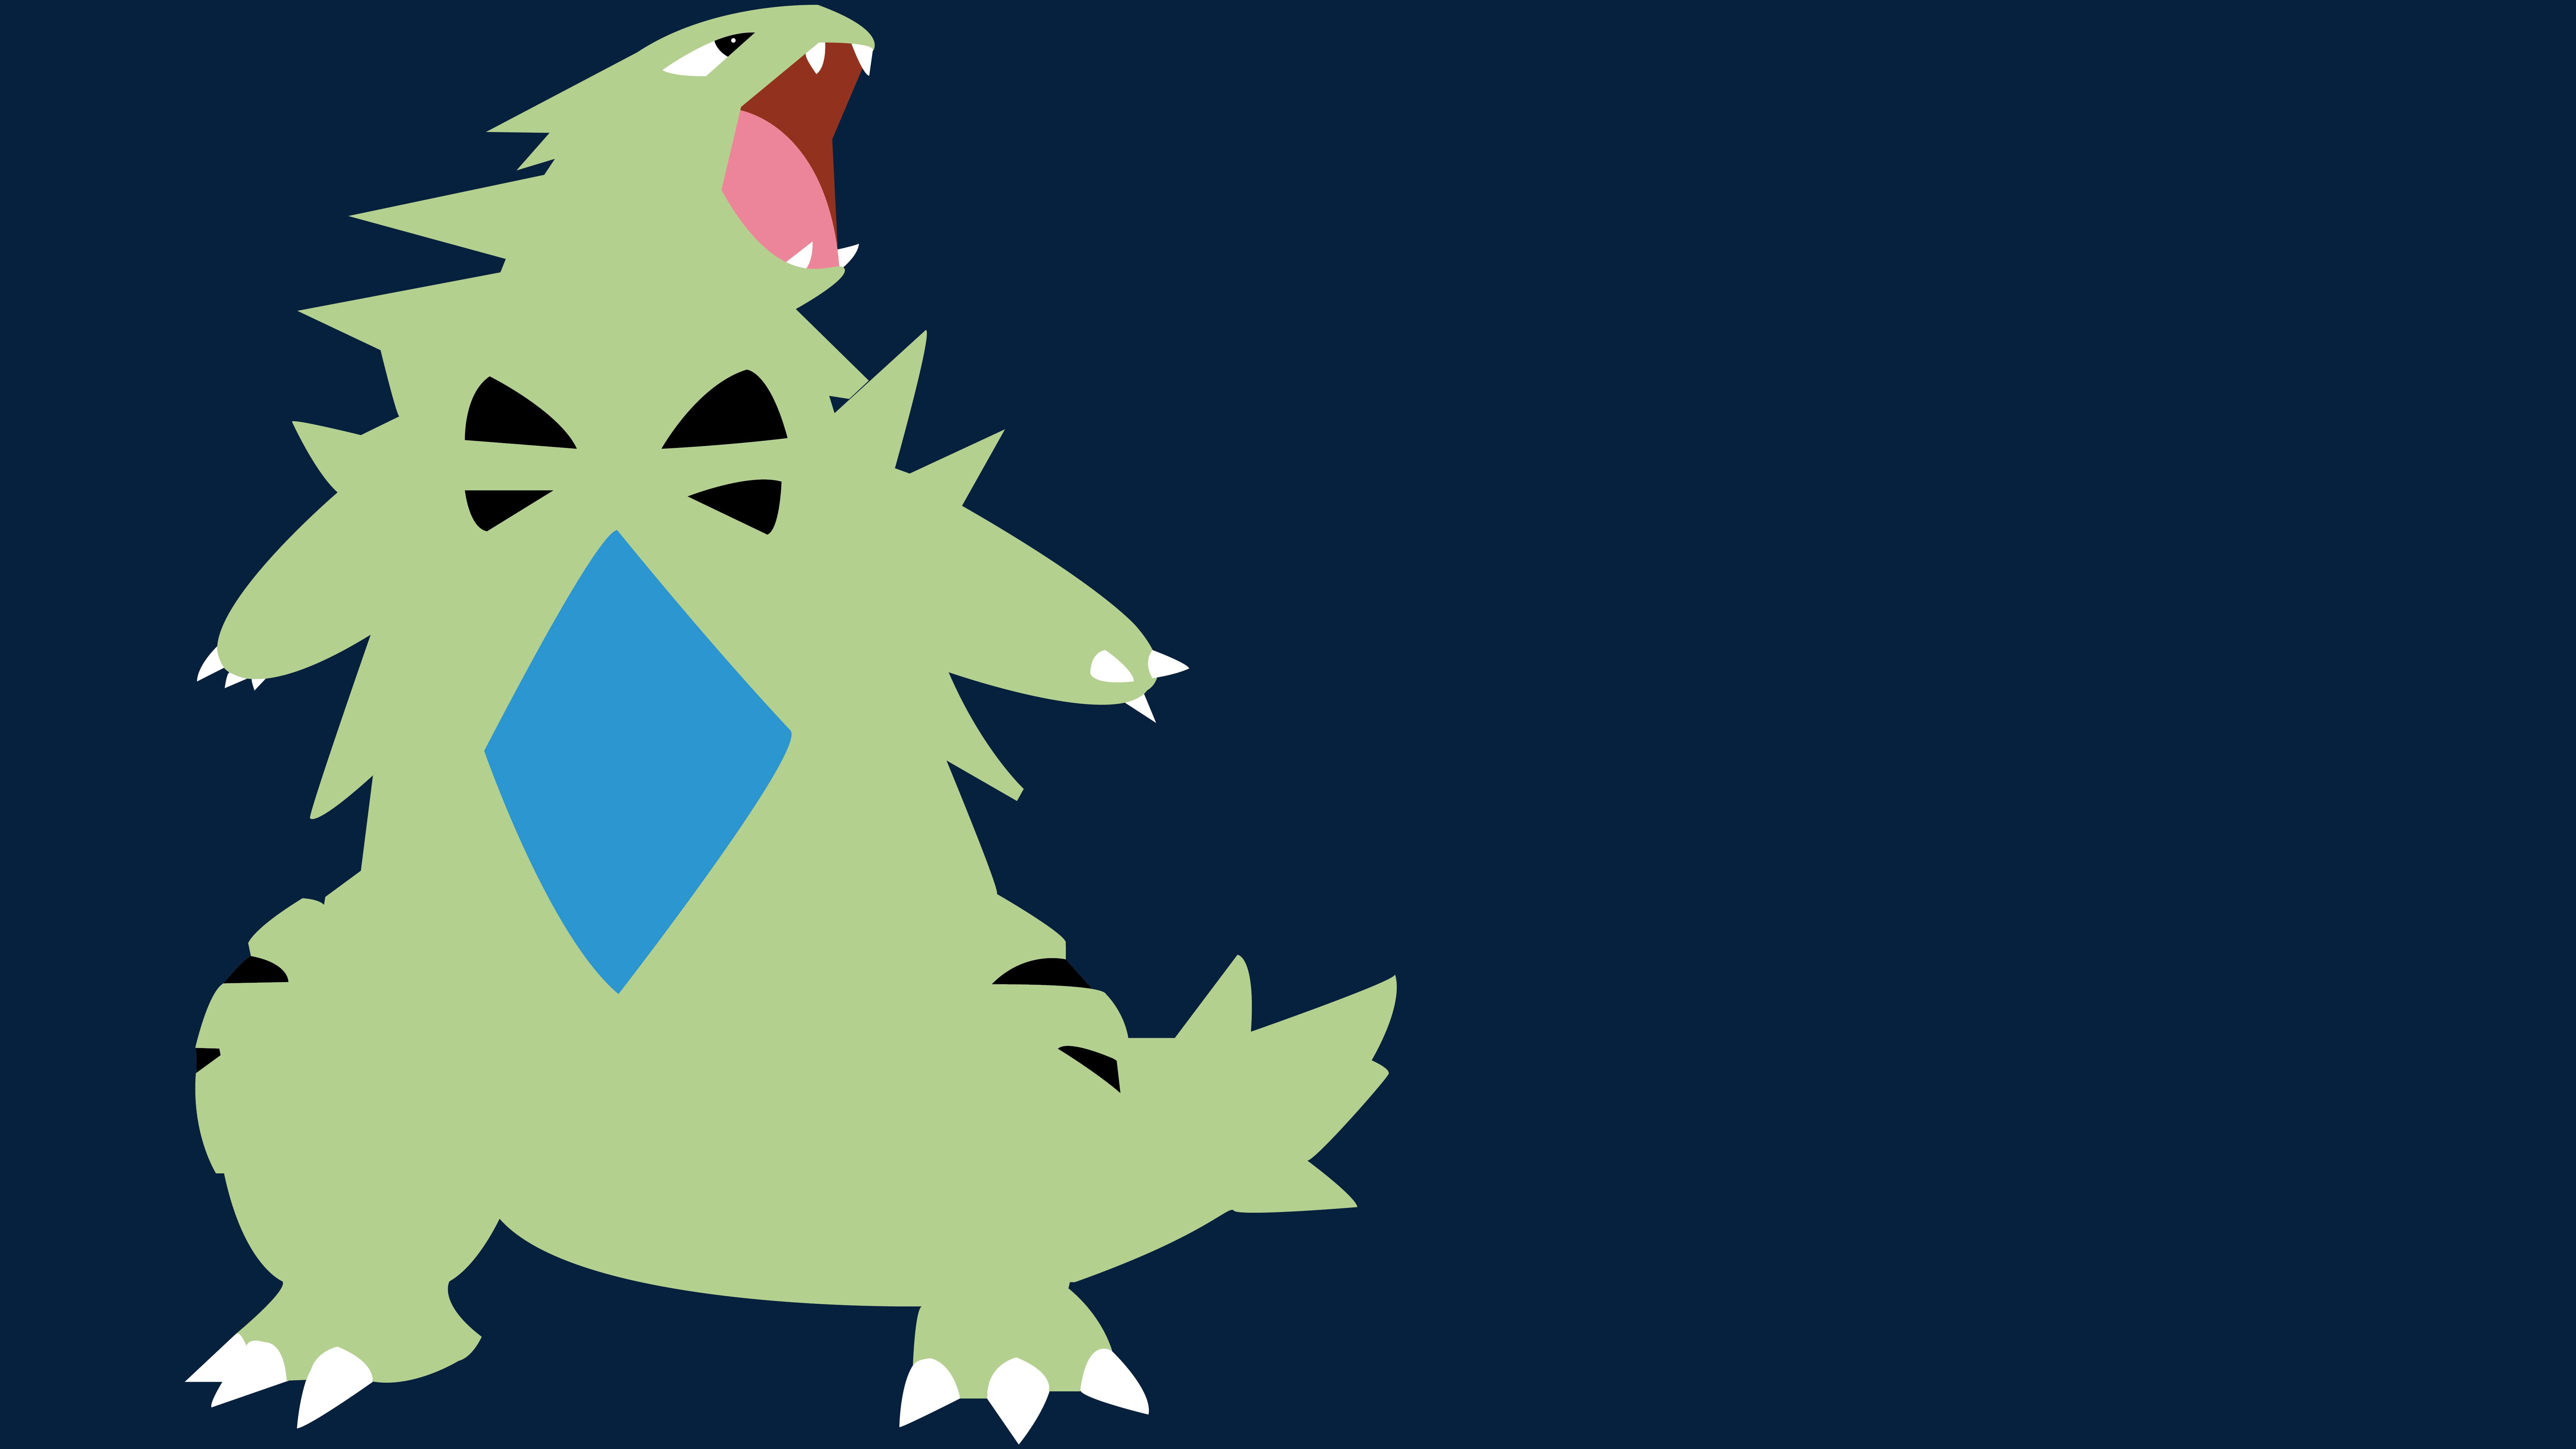 Green And Blue Pokemon Character Illustration Pok Mon Tyranitar